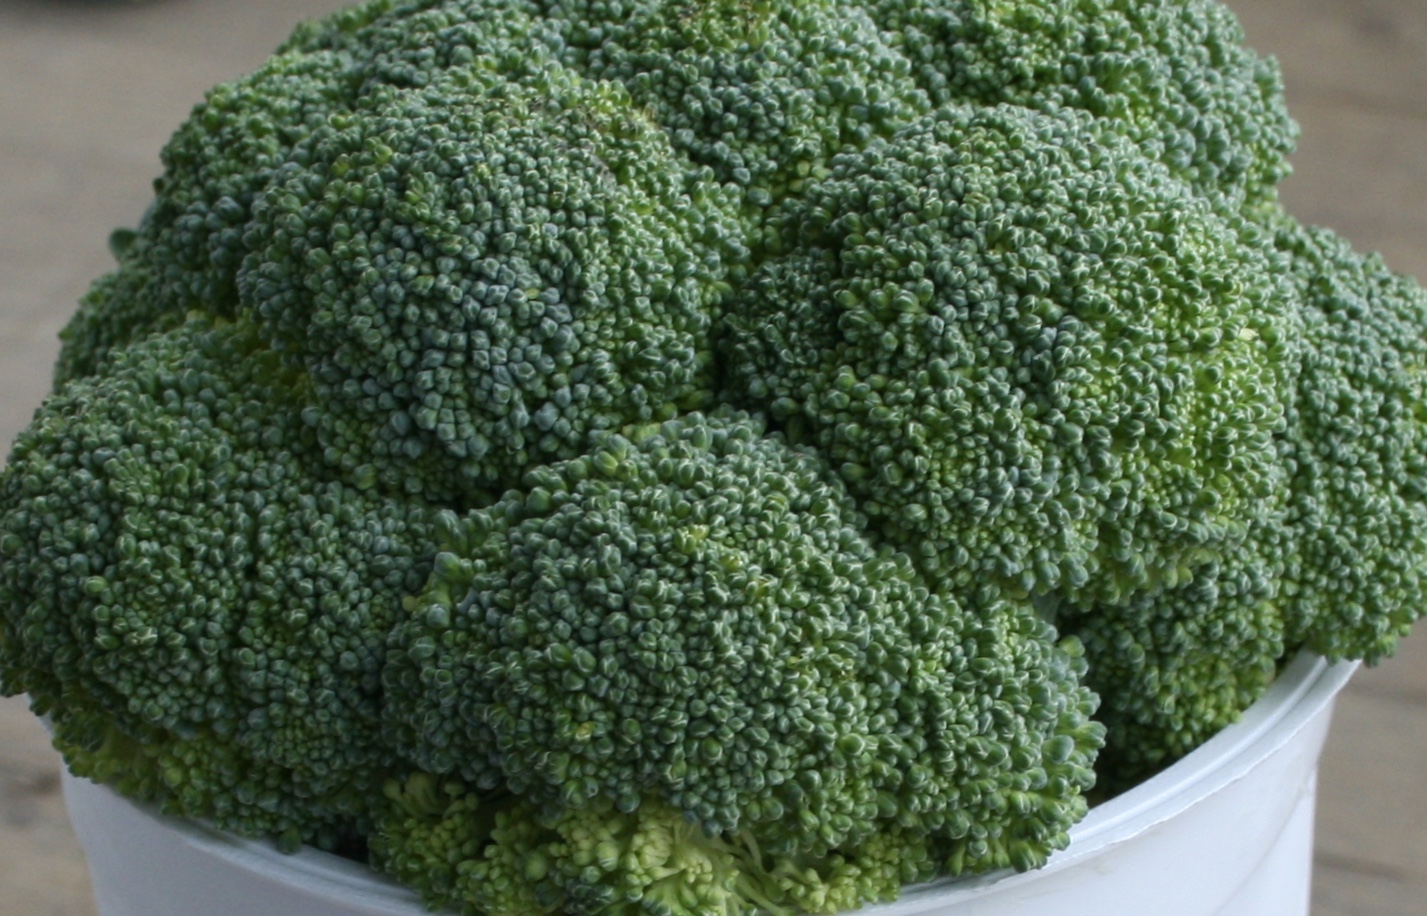 Broccoli in the Bin?